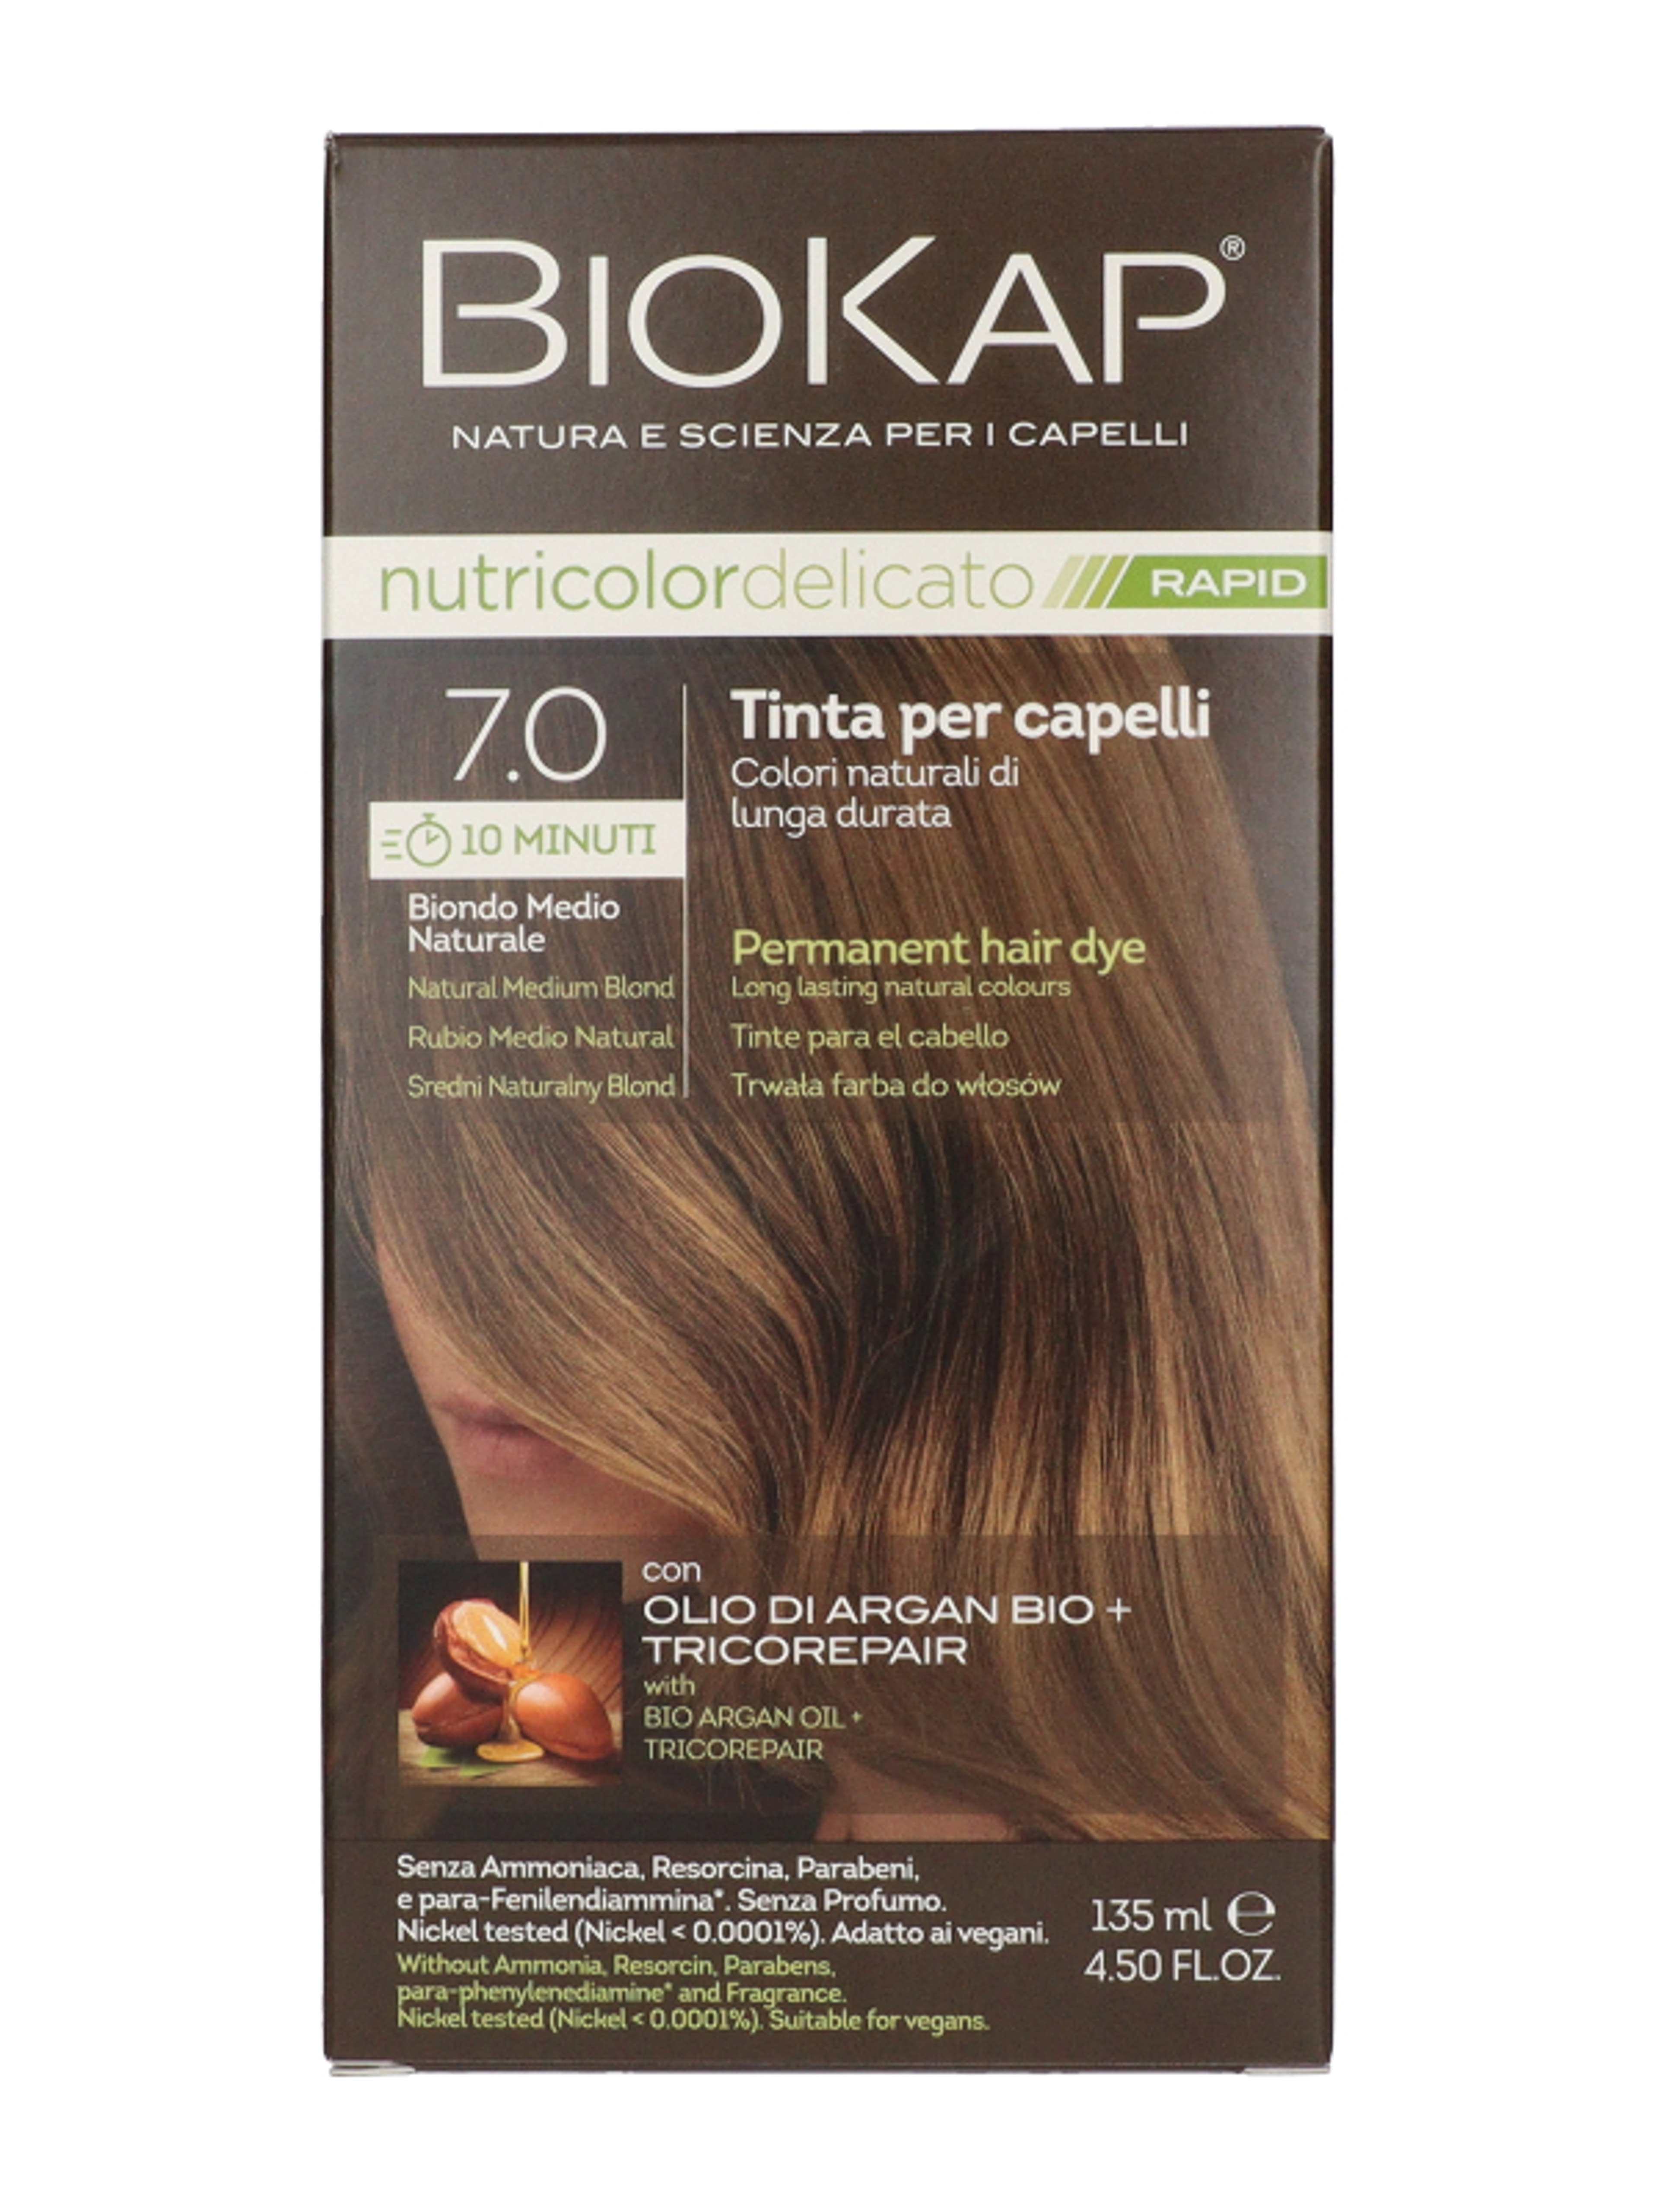 Biokap Nutricolor Rapid tartós hajfesték /7.0 Natural Medium Blond - 1 db